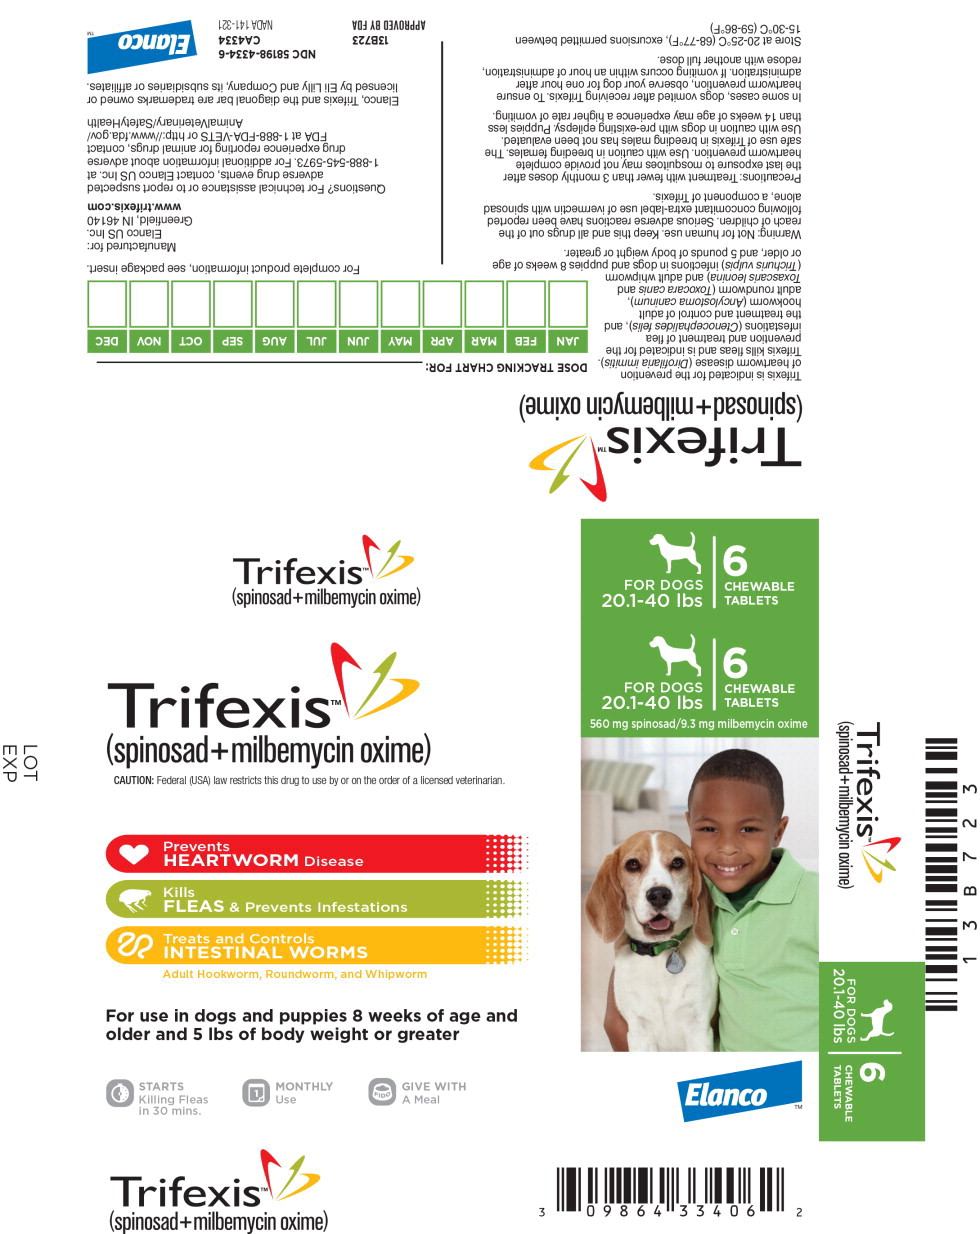 Principal Display Panel - Trifexis 560 mg Carton Label
